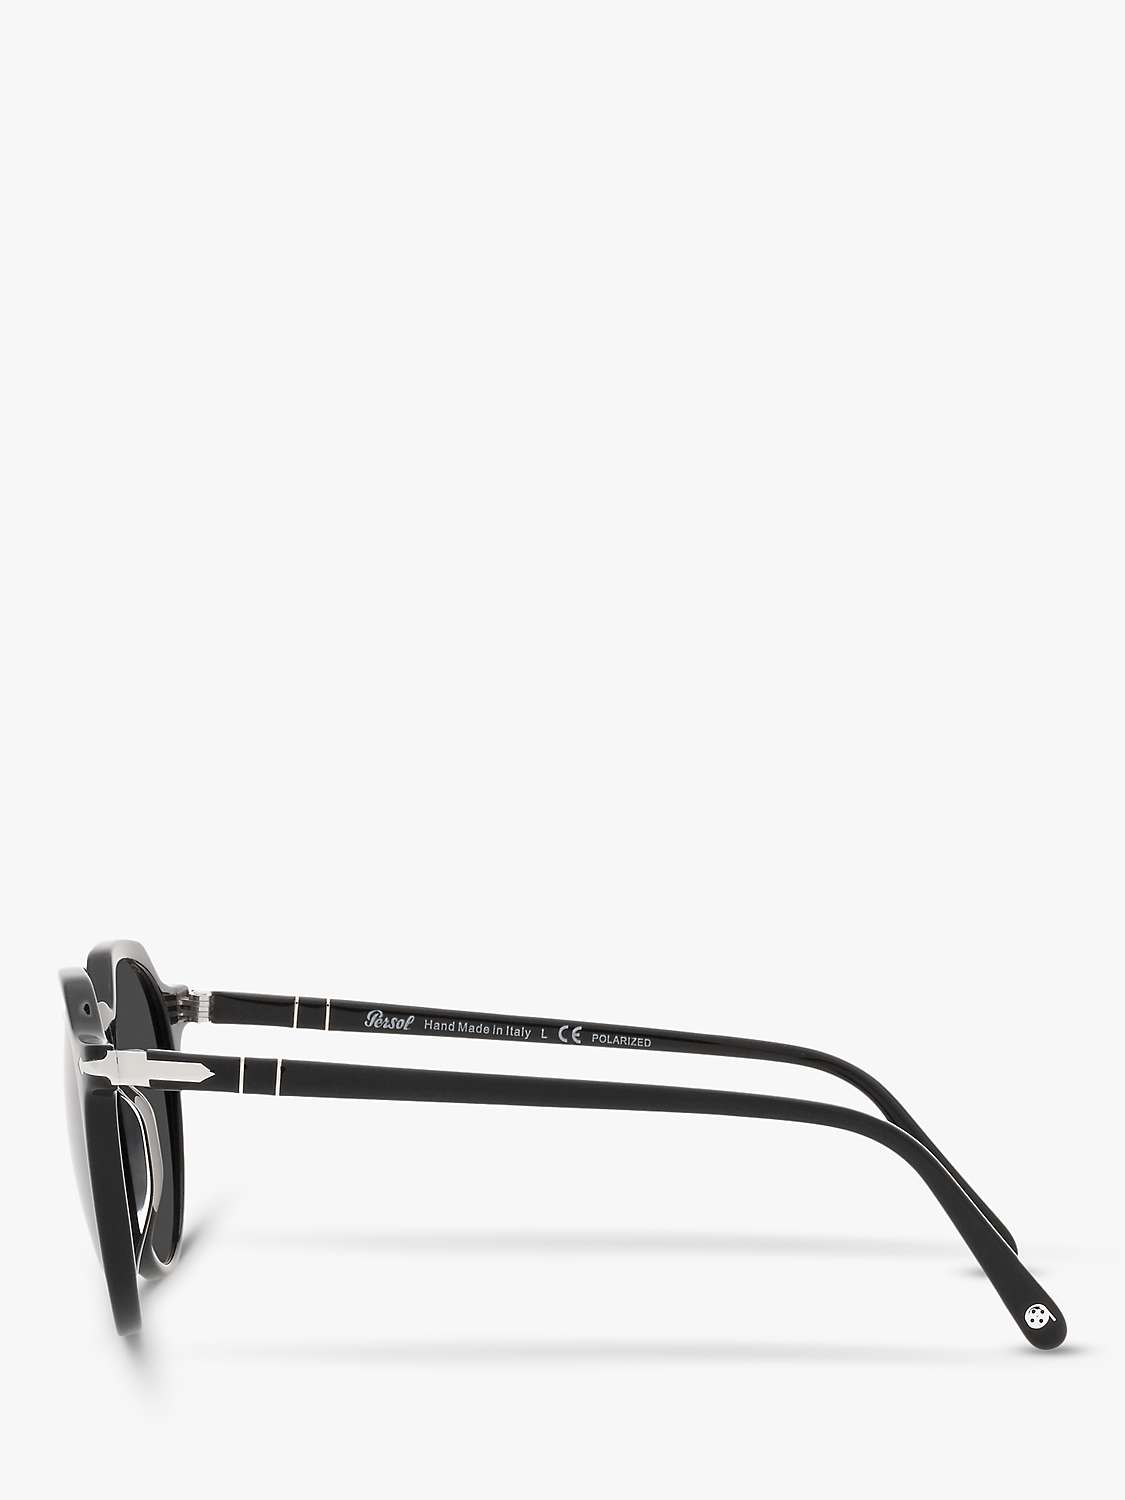 Buy Persol PO3281S Unisex Polarised Oval Sunglasses, Black/Grey Online at johnlewis.com